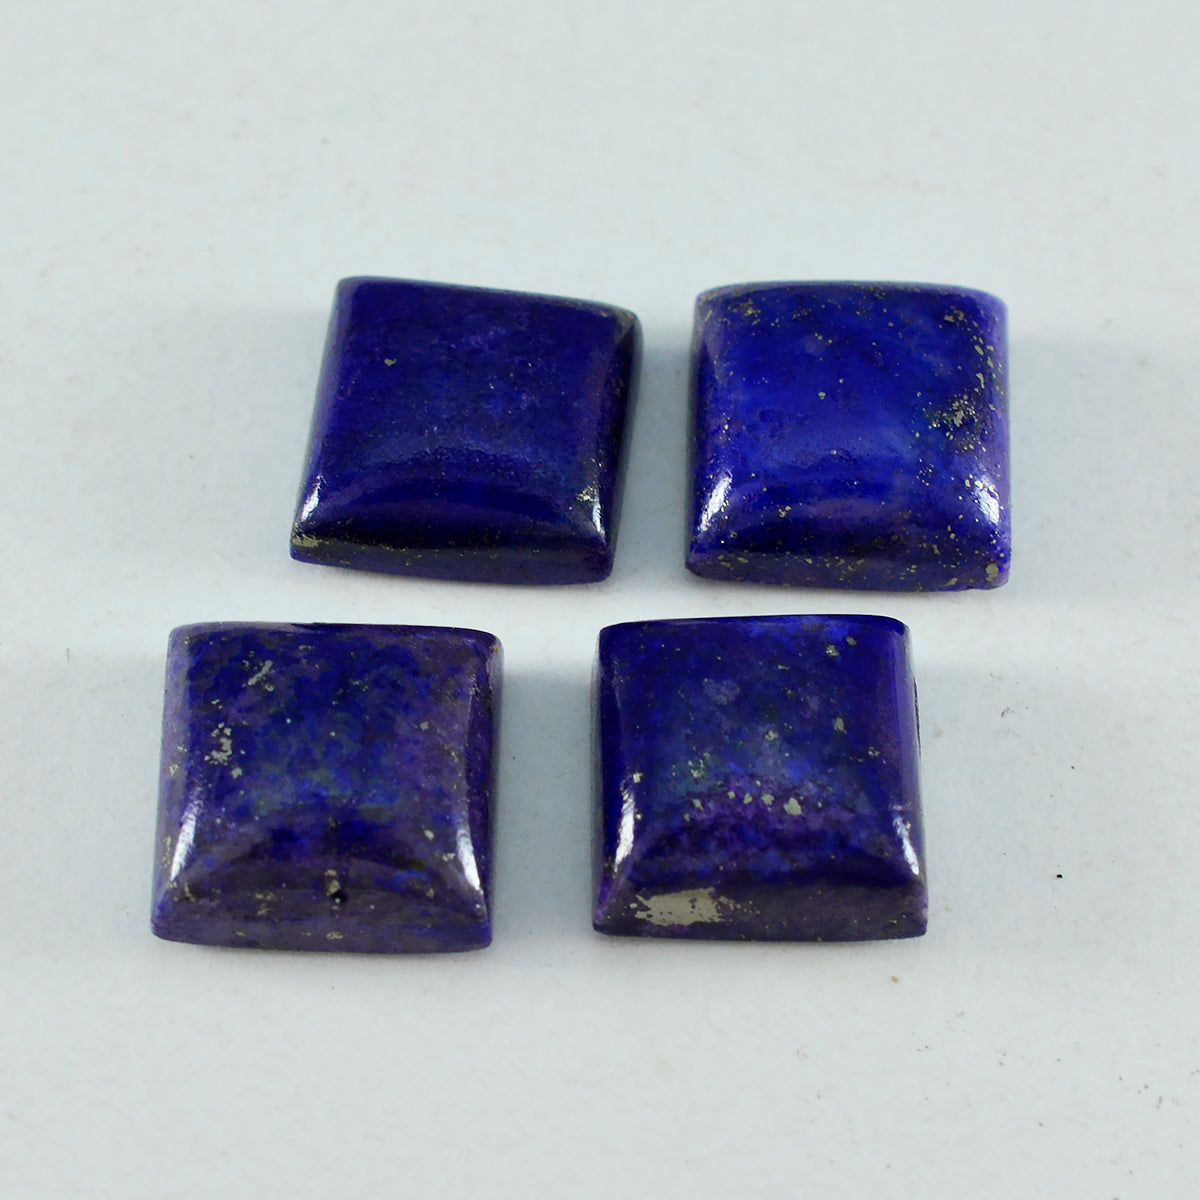 Riyogems 1 Stück blauer Lapislazuli-Cabochon, 15 x 15 mm, quadratische Form, A1-Qualitätsstein